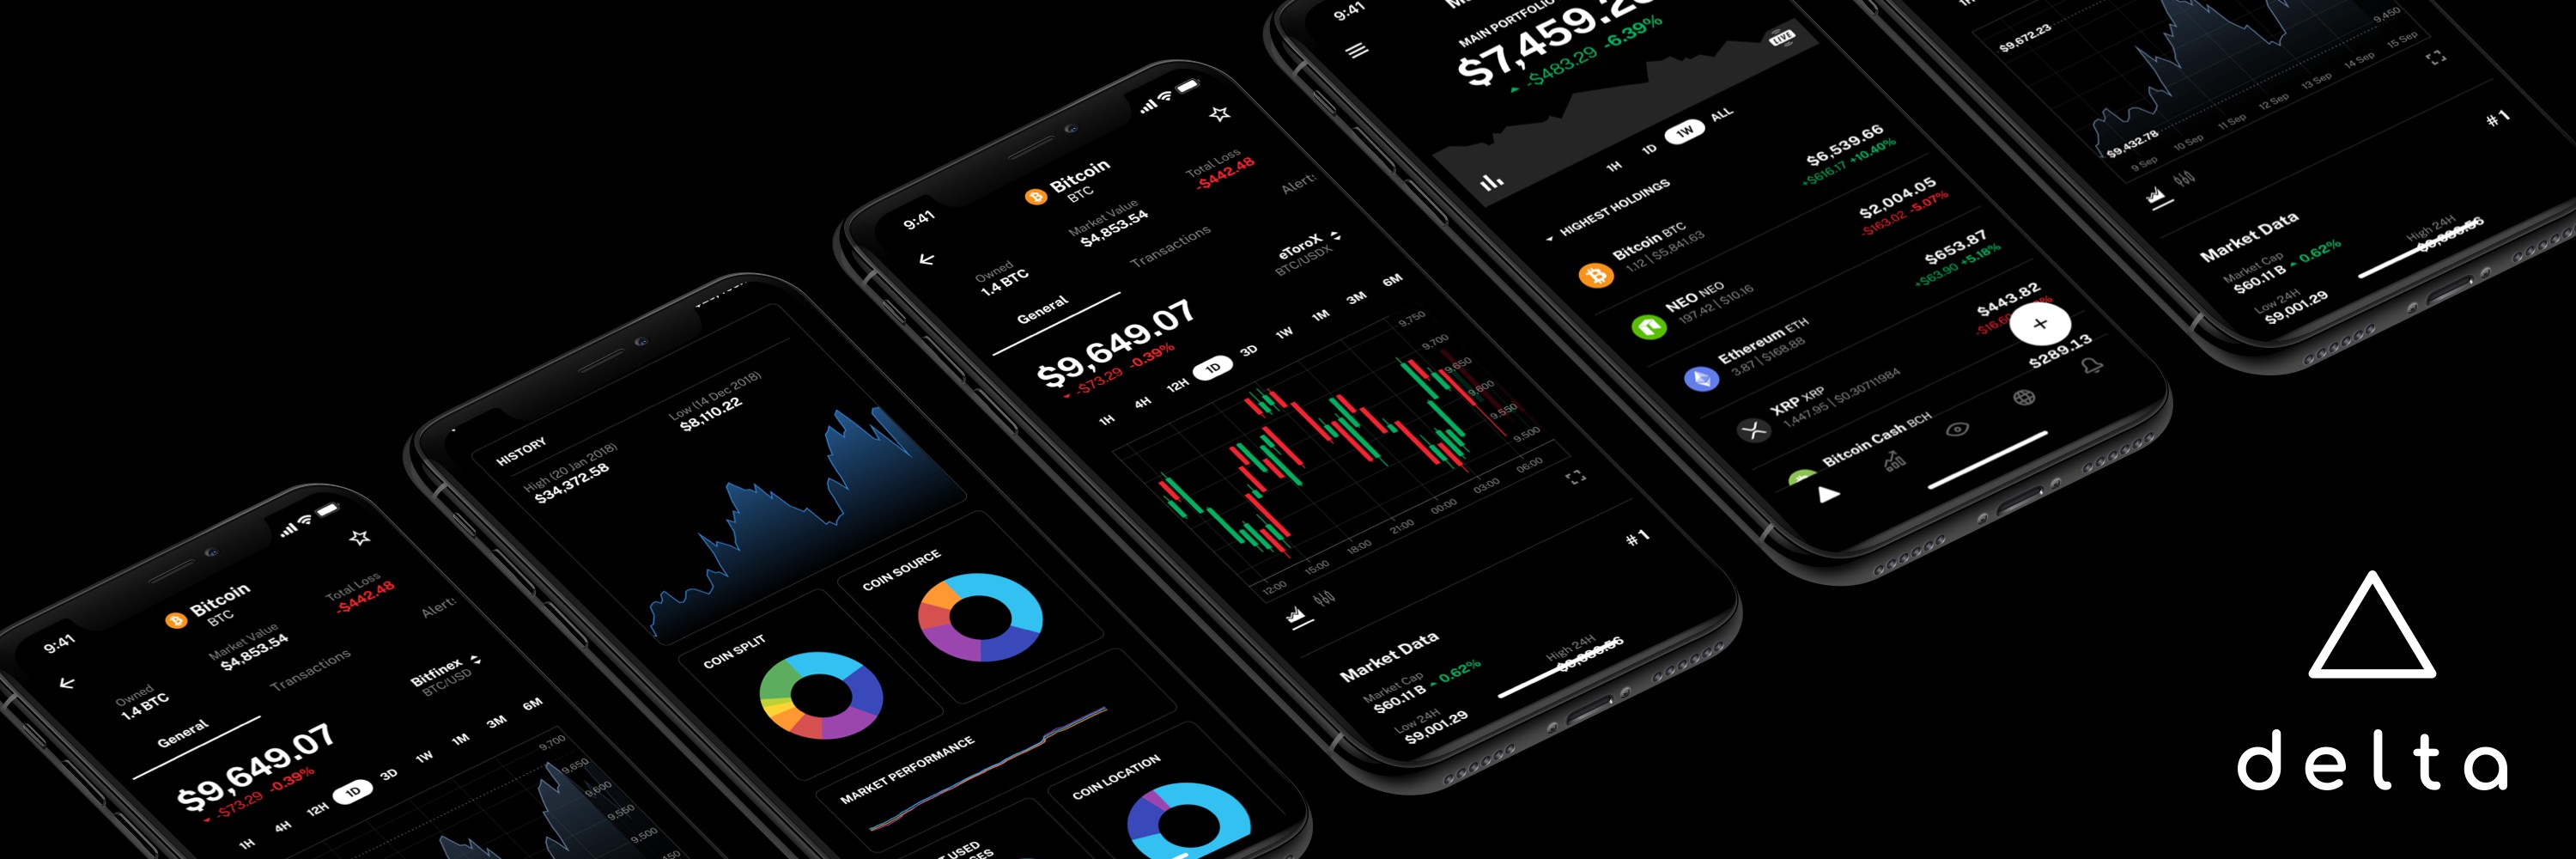 delta crypto portfolio tracking app